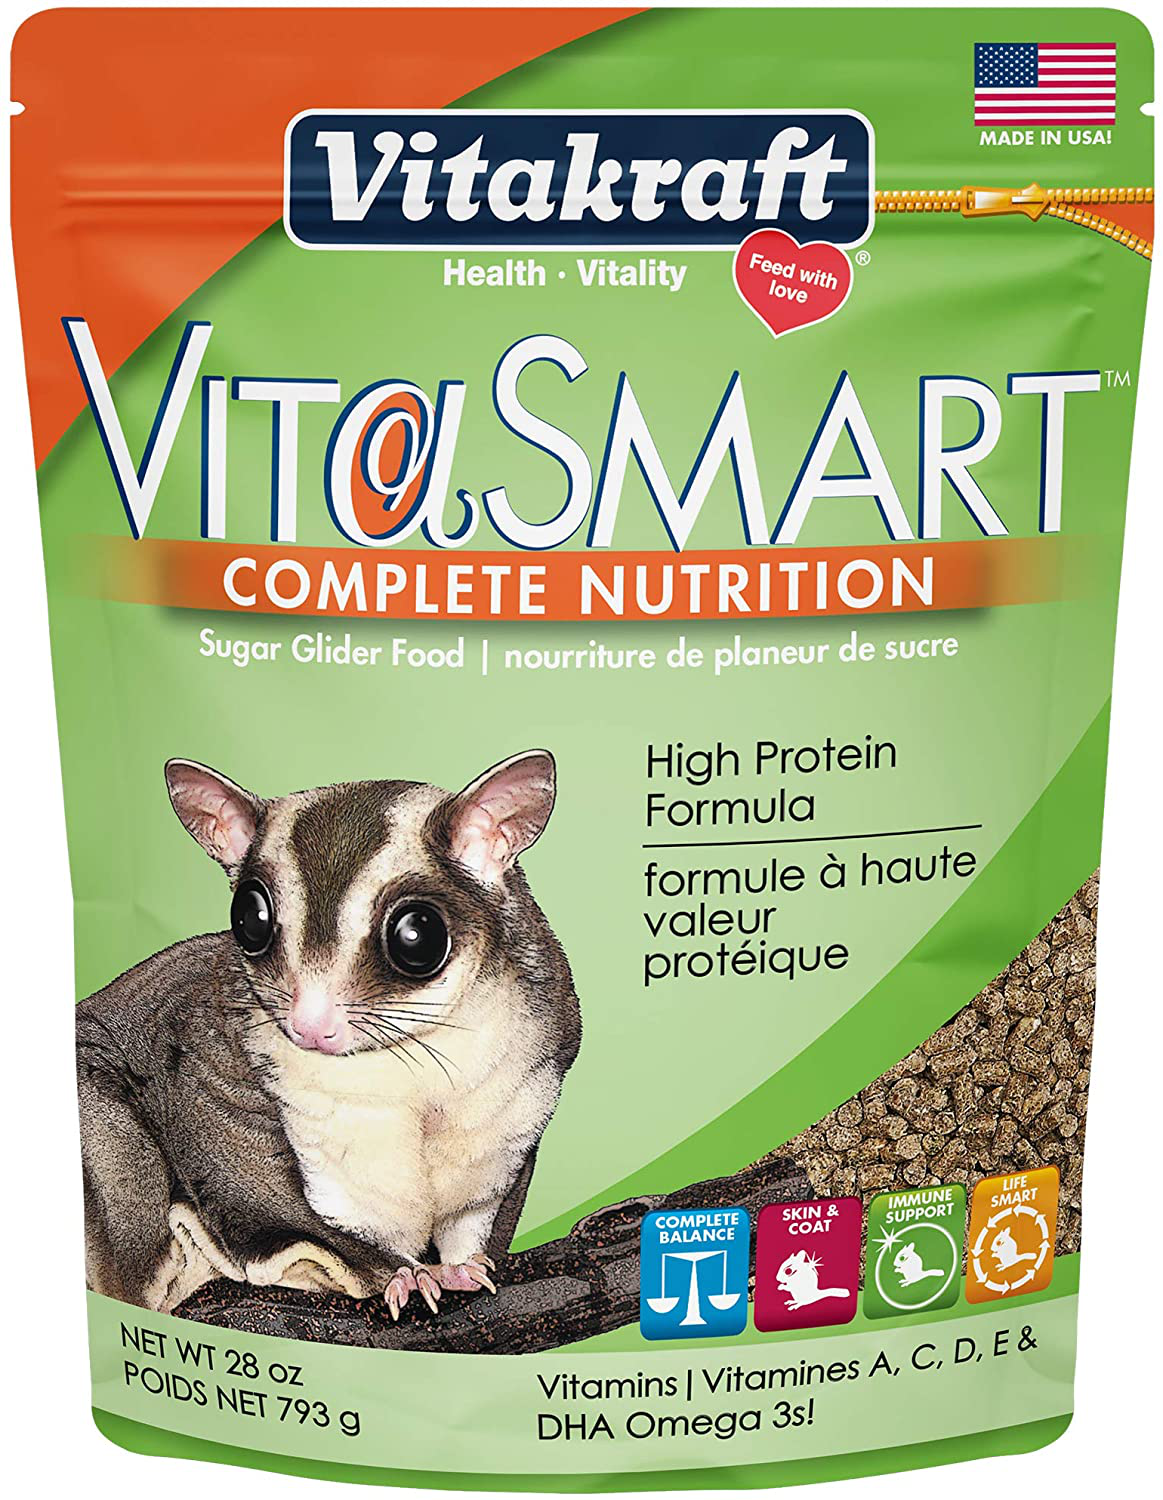 Vitakraft Vitasmart Sugar Glider Food - High Protein Formula, 28 Ounce